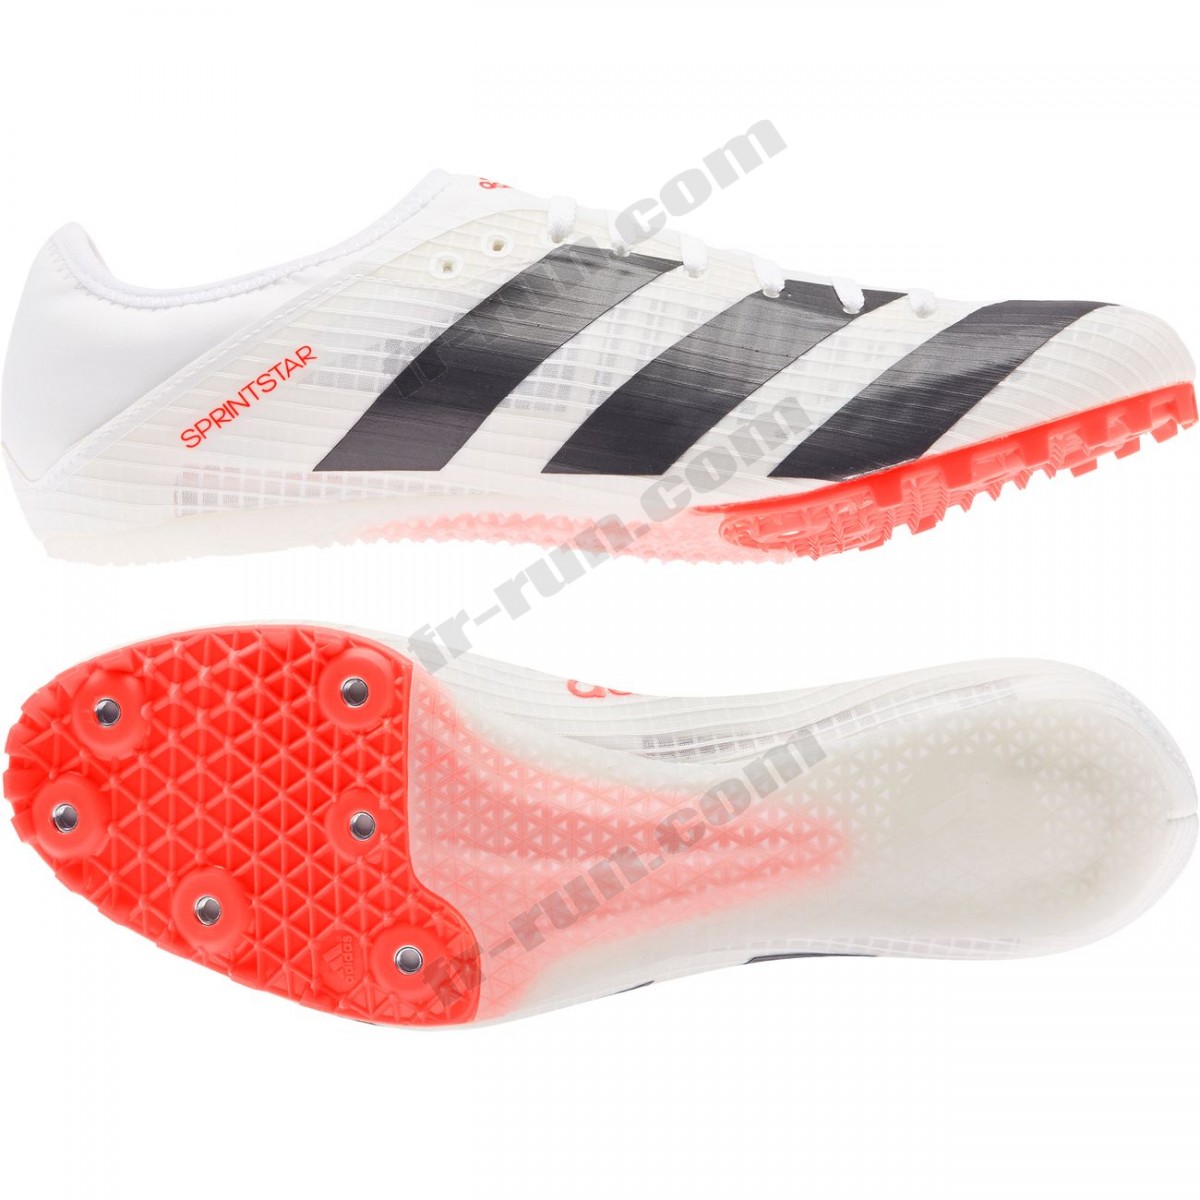 Adidas/Athlétisme homme ADIDAS Chaussures adidas Sprintstar Tokyo √ Nouveau style √ Soldes - -2